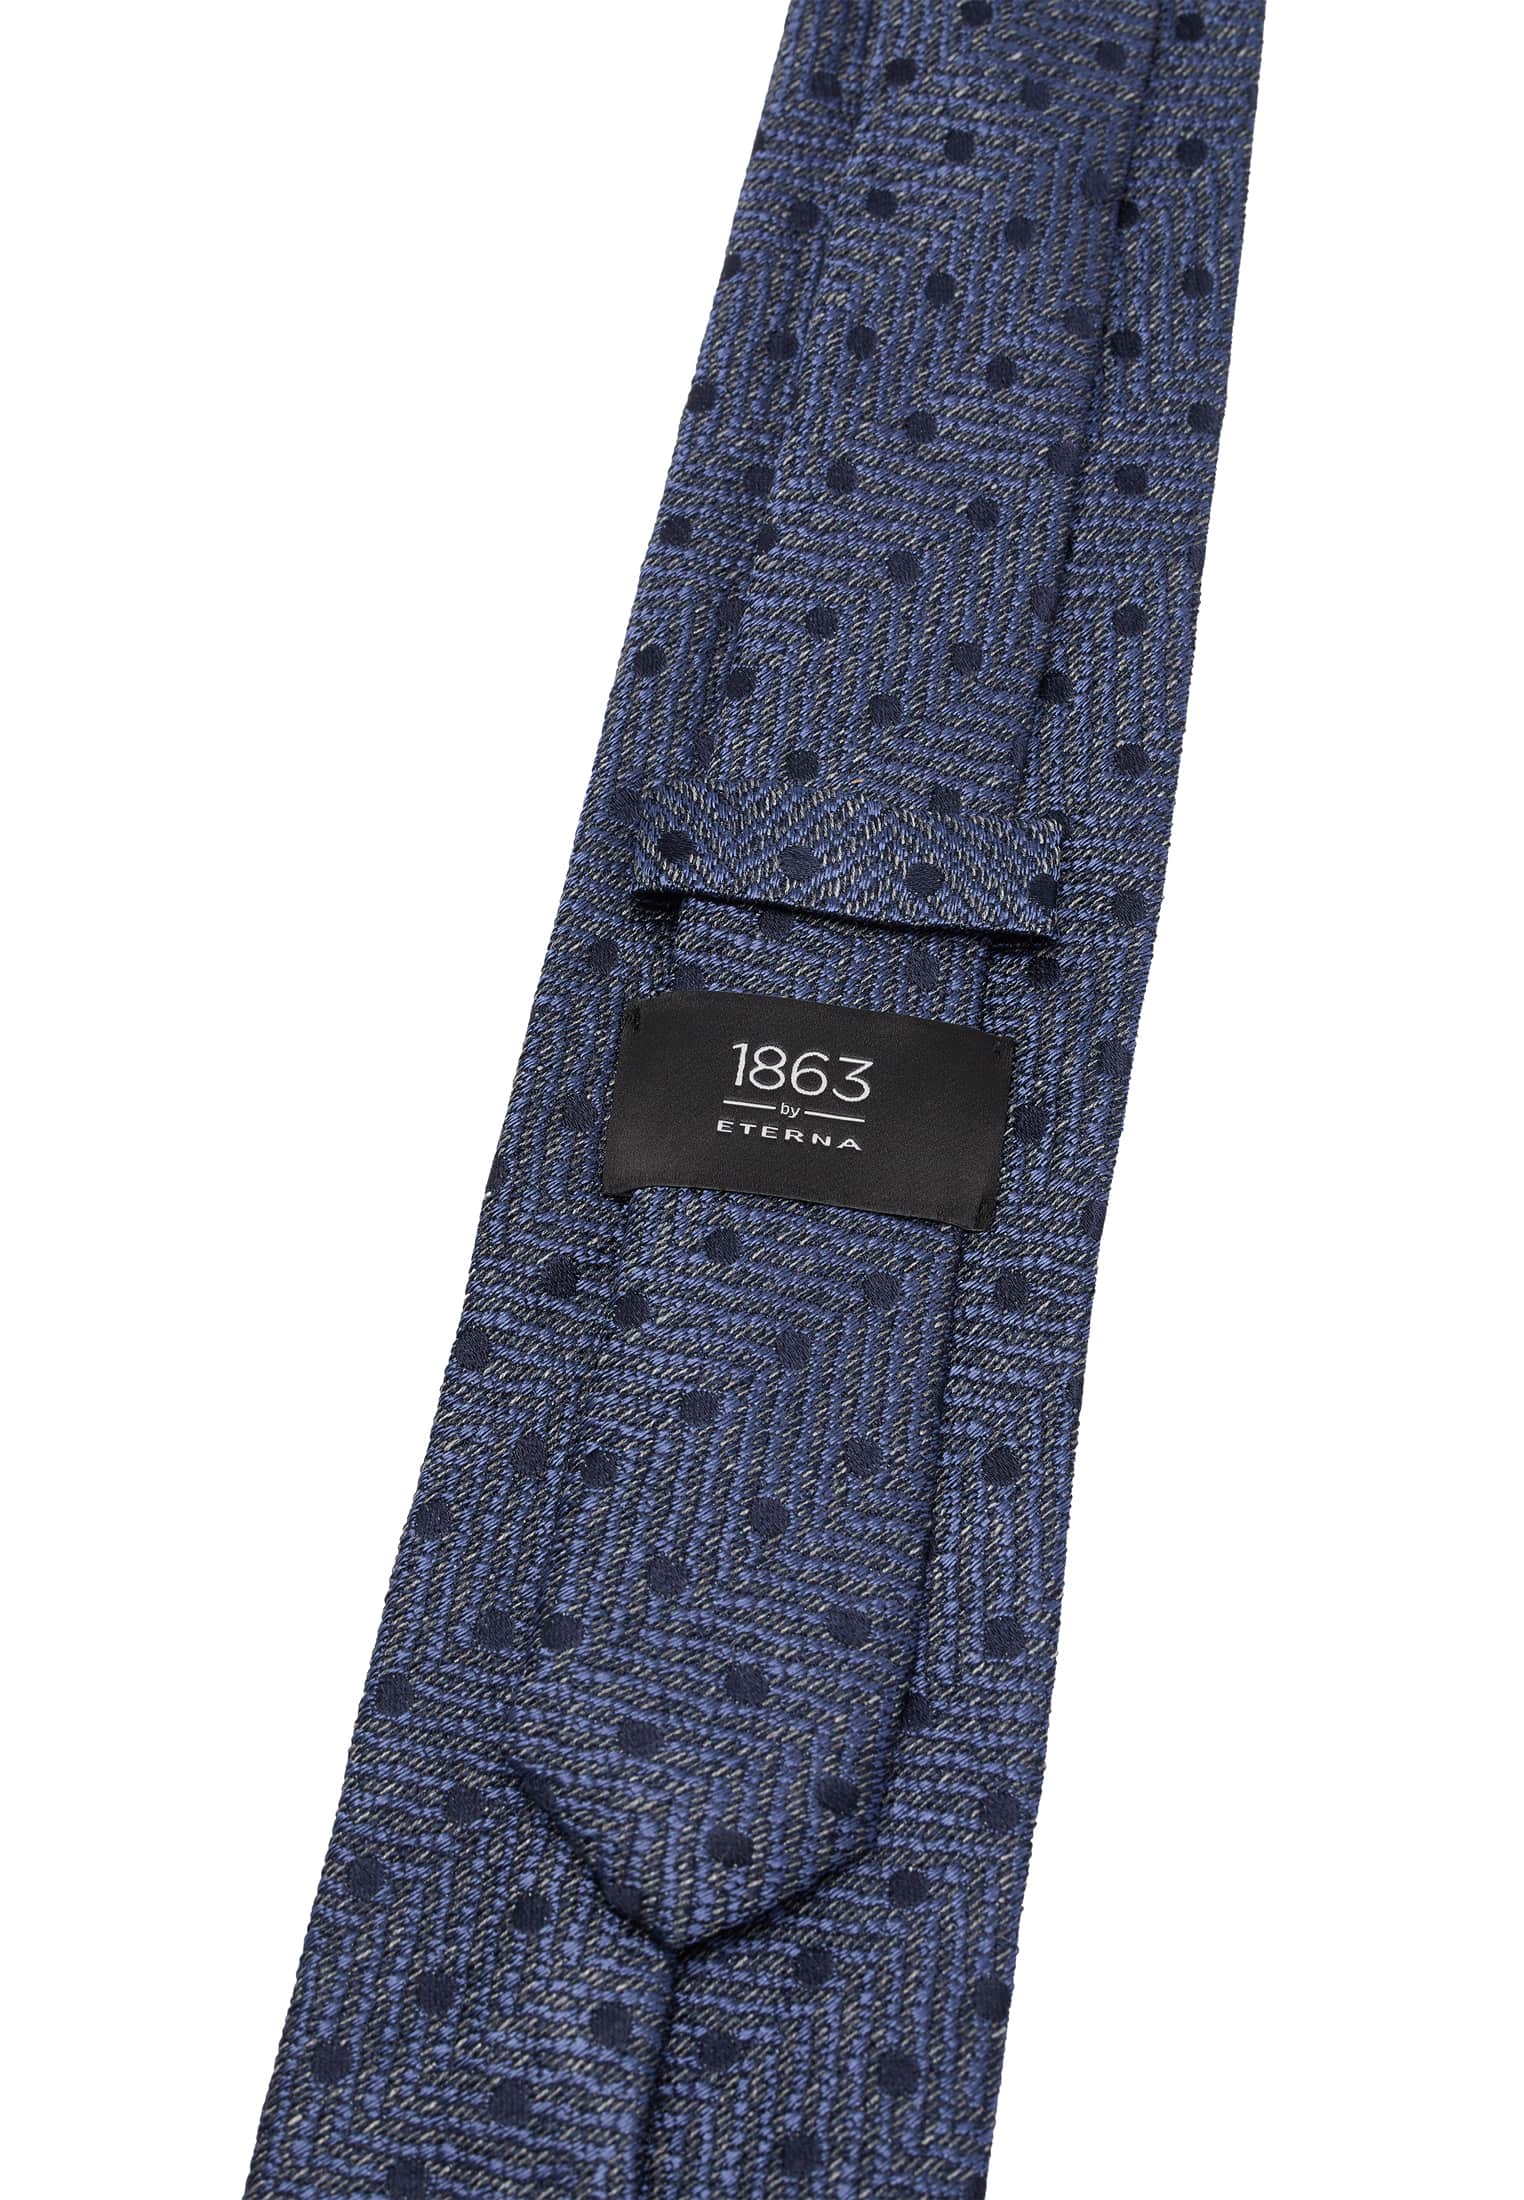 Krawatte in dunkelblau strukturiert | dunkelblau | 142 | 1AC01933-01-81-142